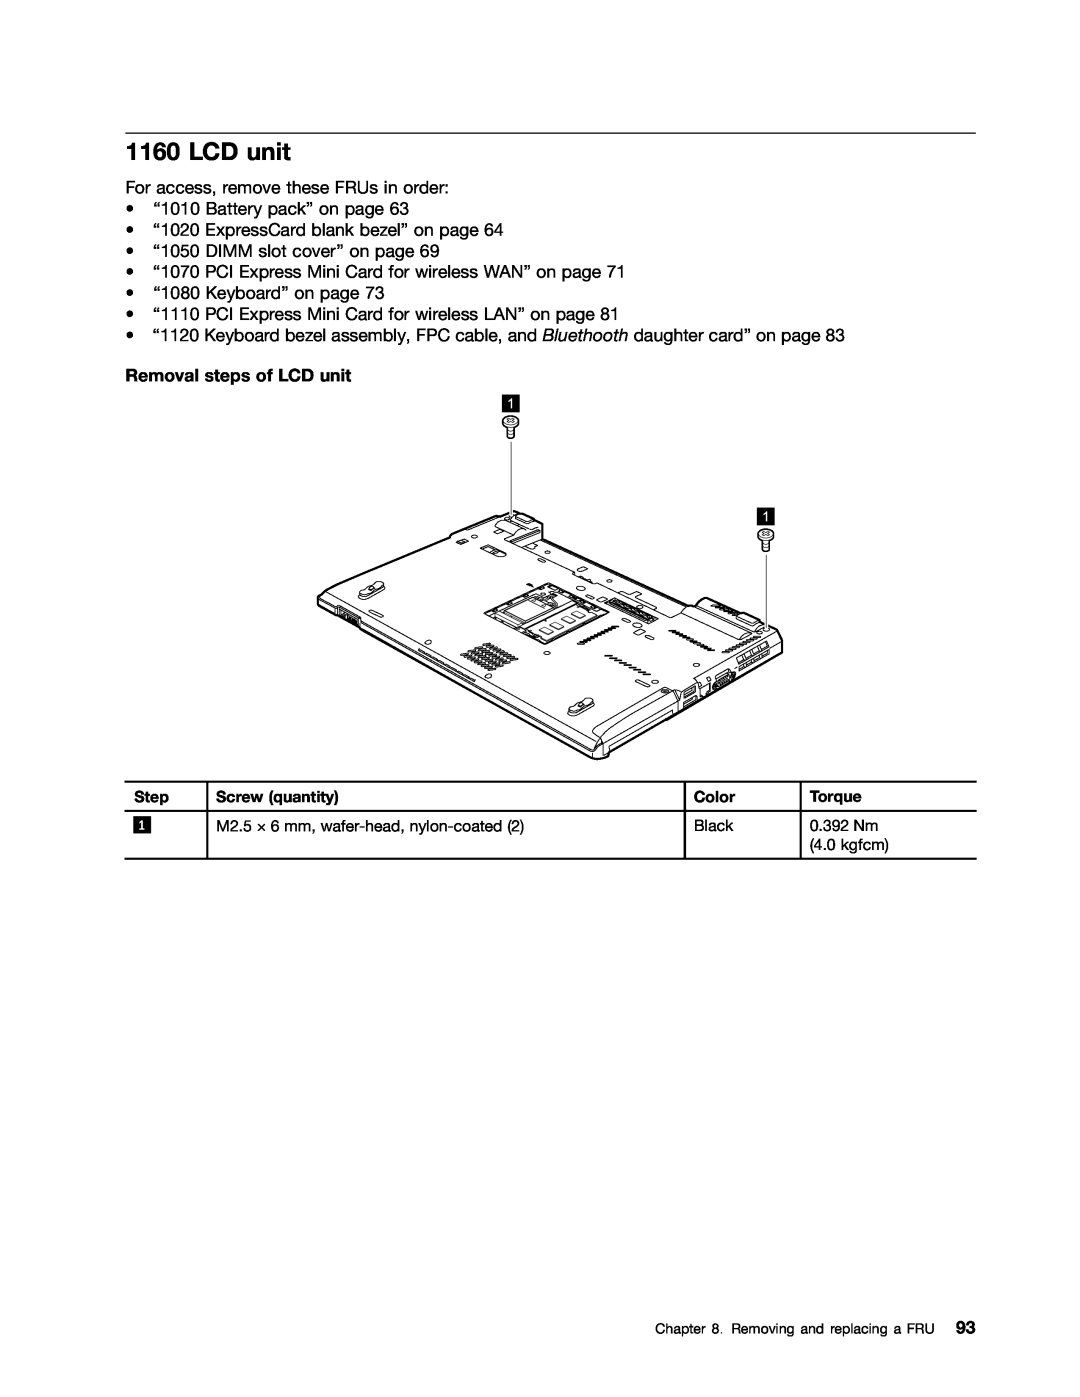 Lenovo T420i manual Removal steps of LCD unit 